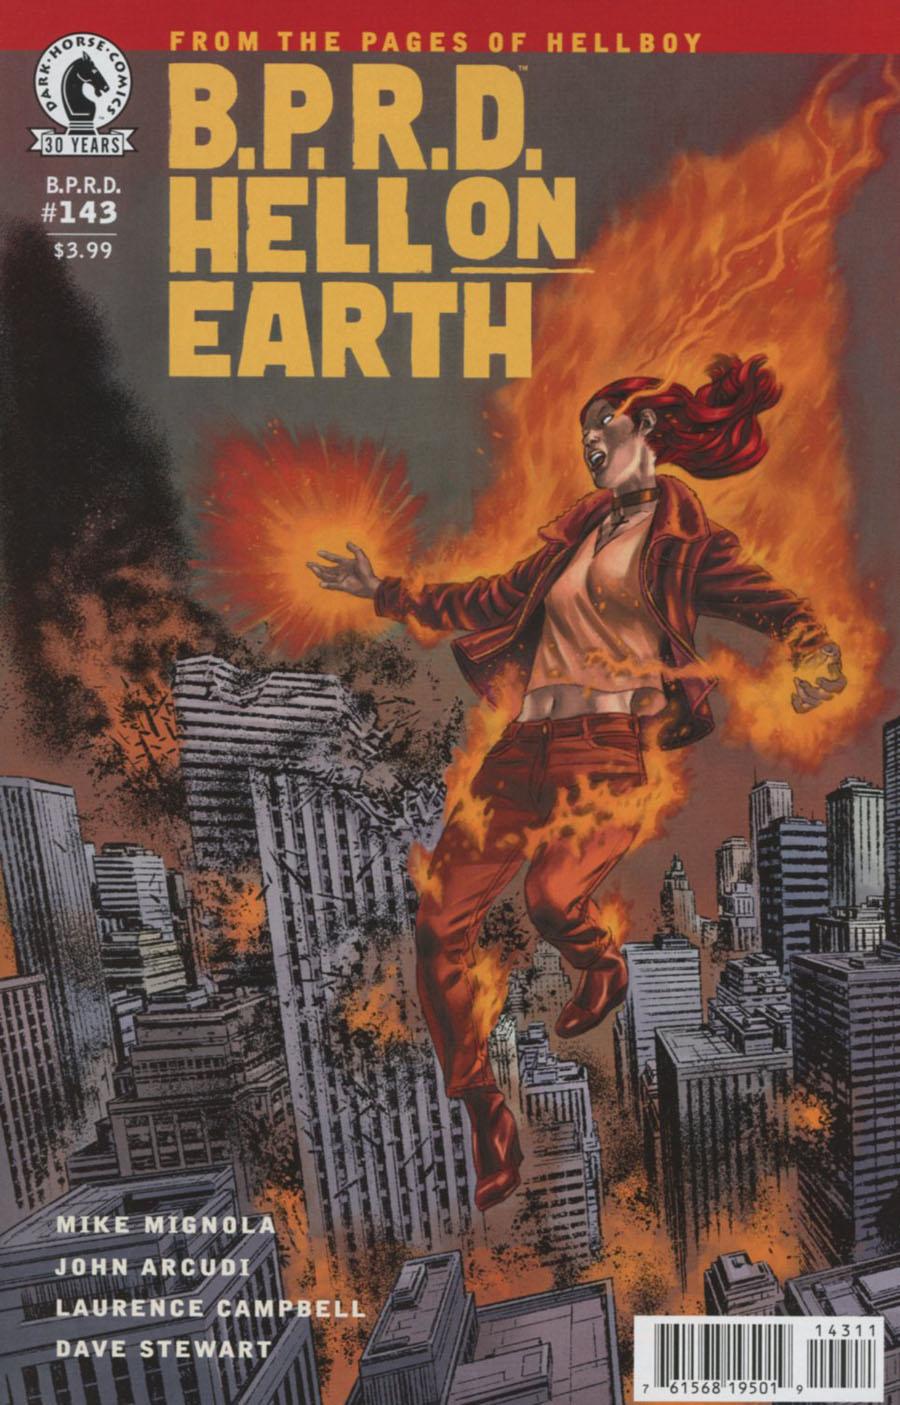 BPRD Hell On Earth Vol. 1 #143